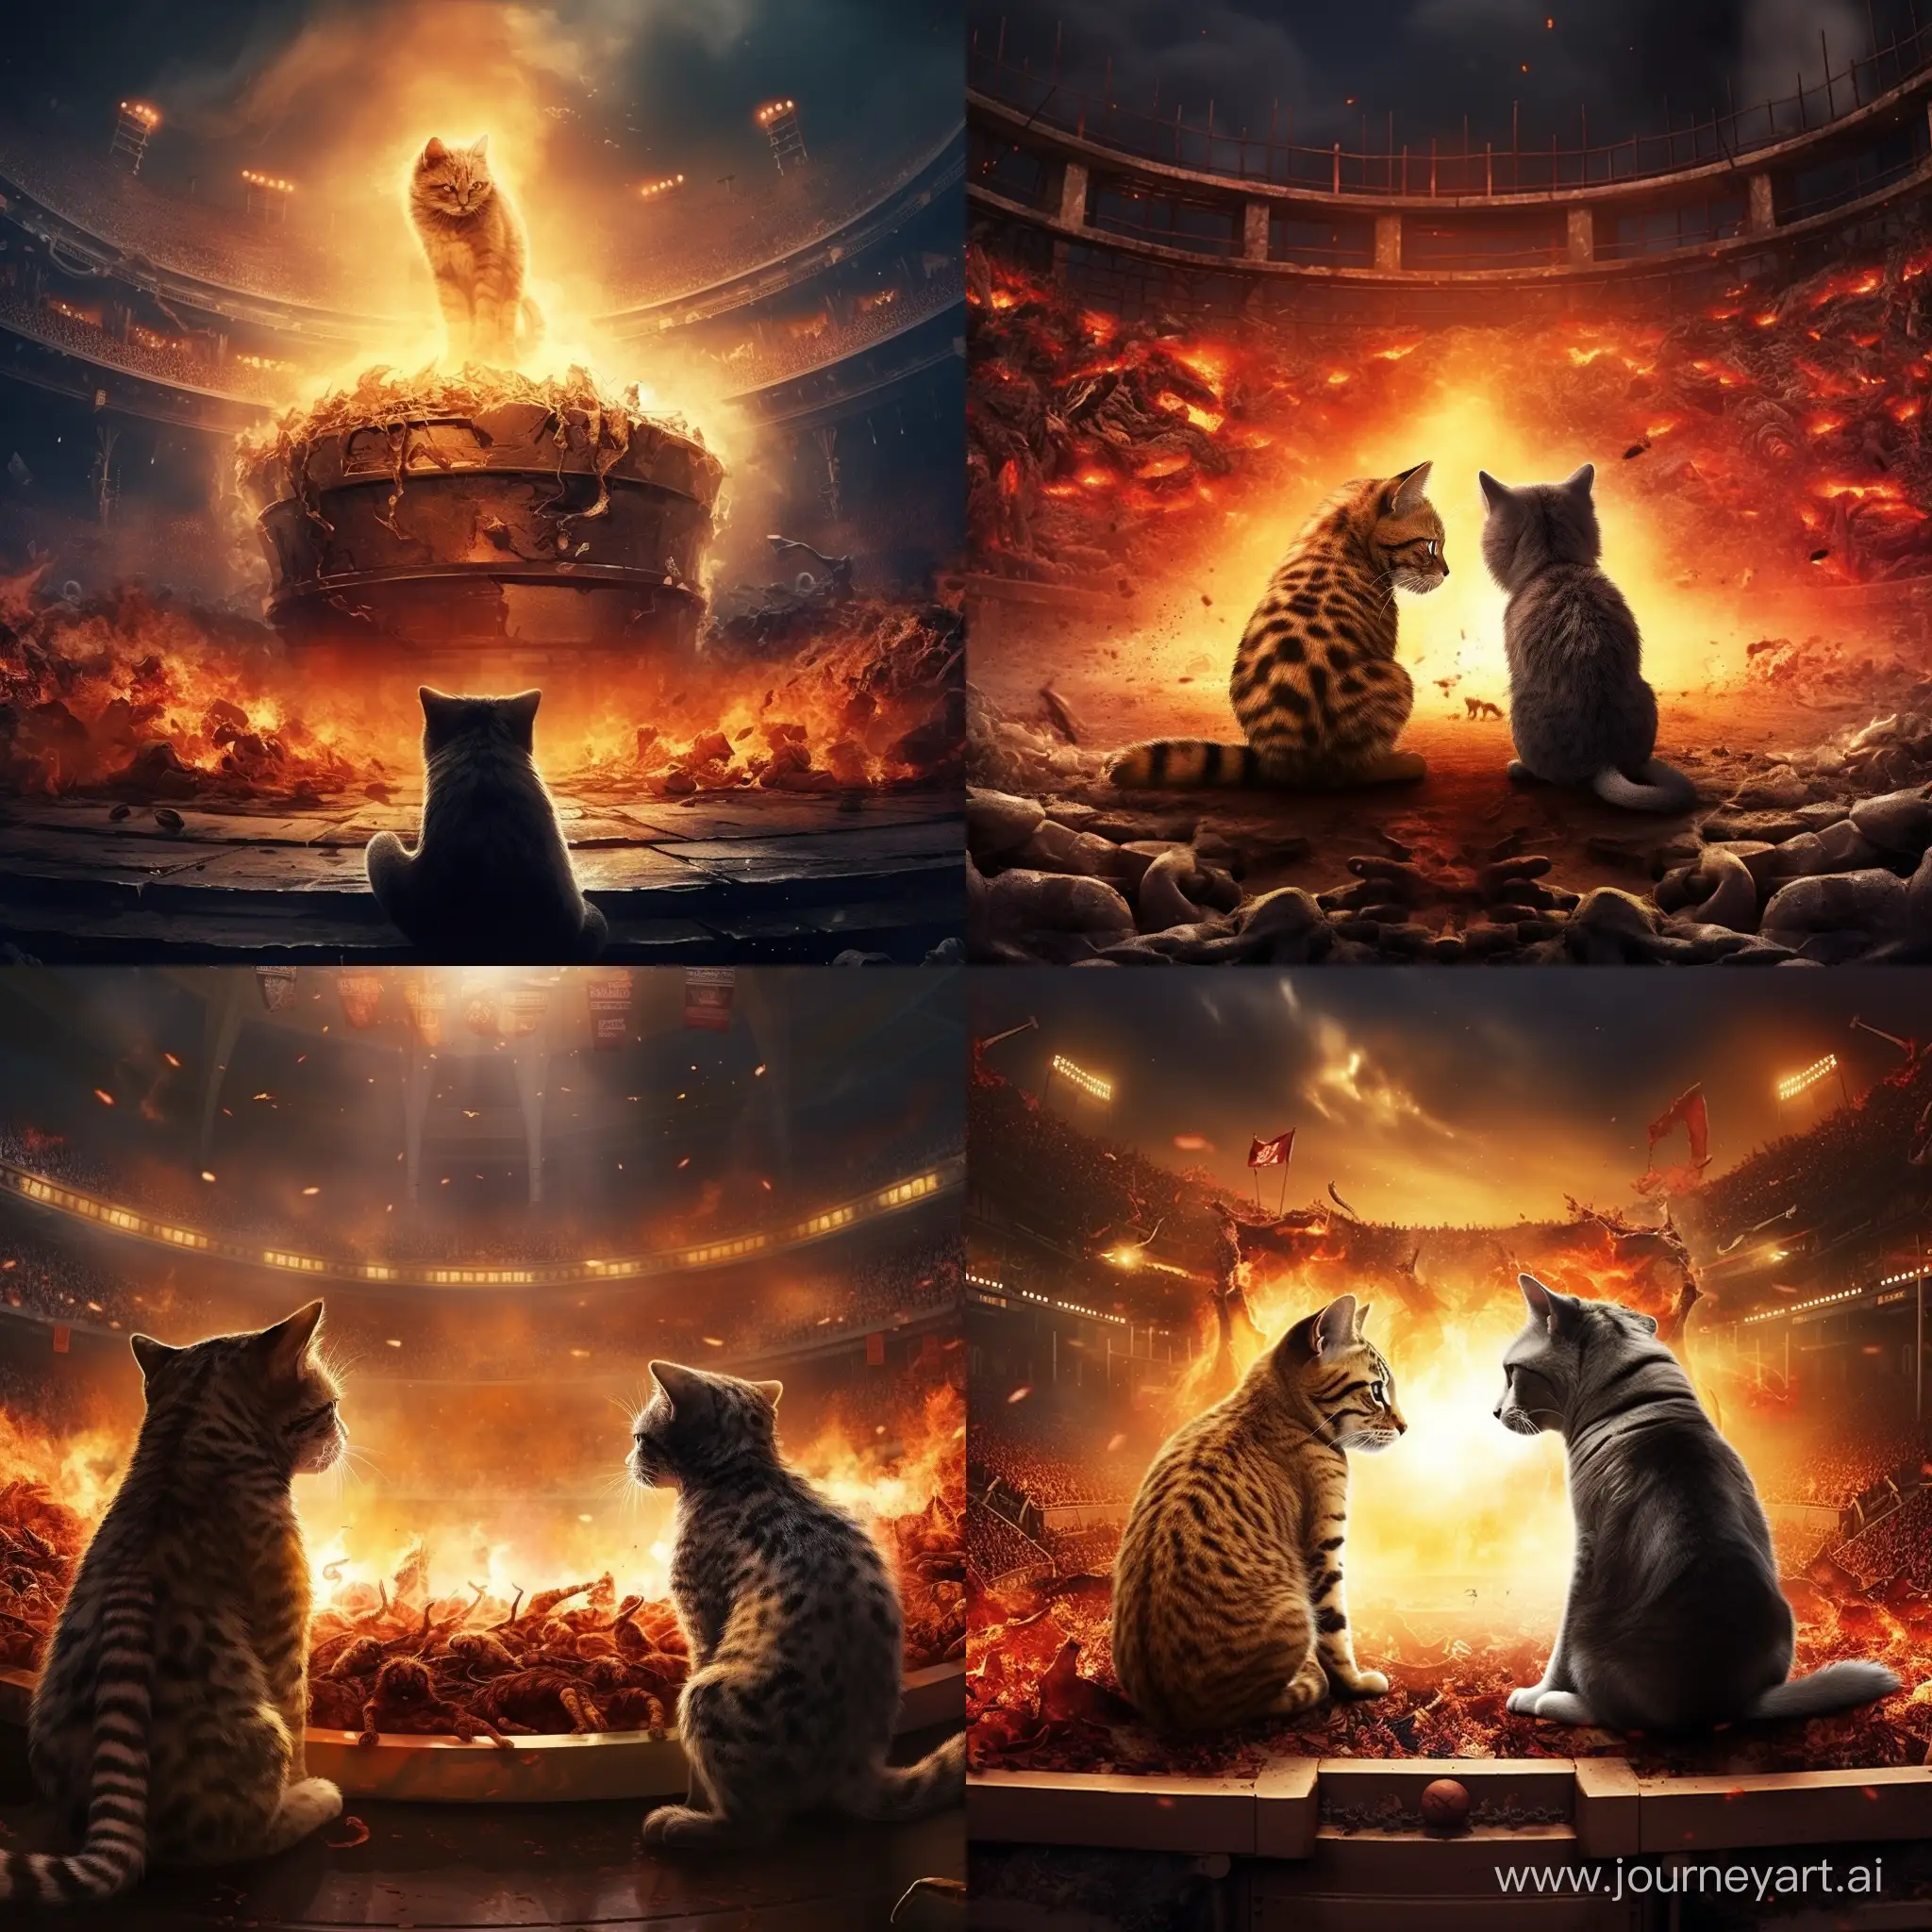 Intense-CatDog-Confrontation-Amidst-Fiery-Stadium-Atmosphere